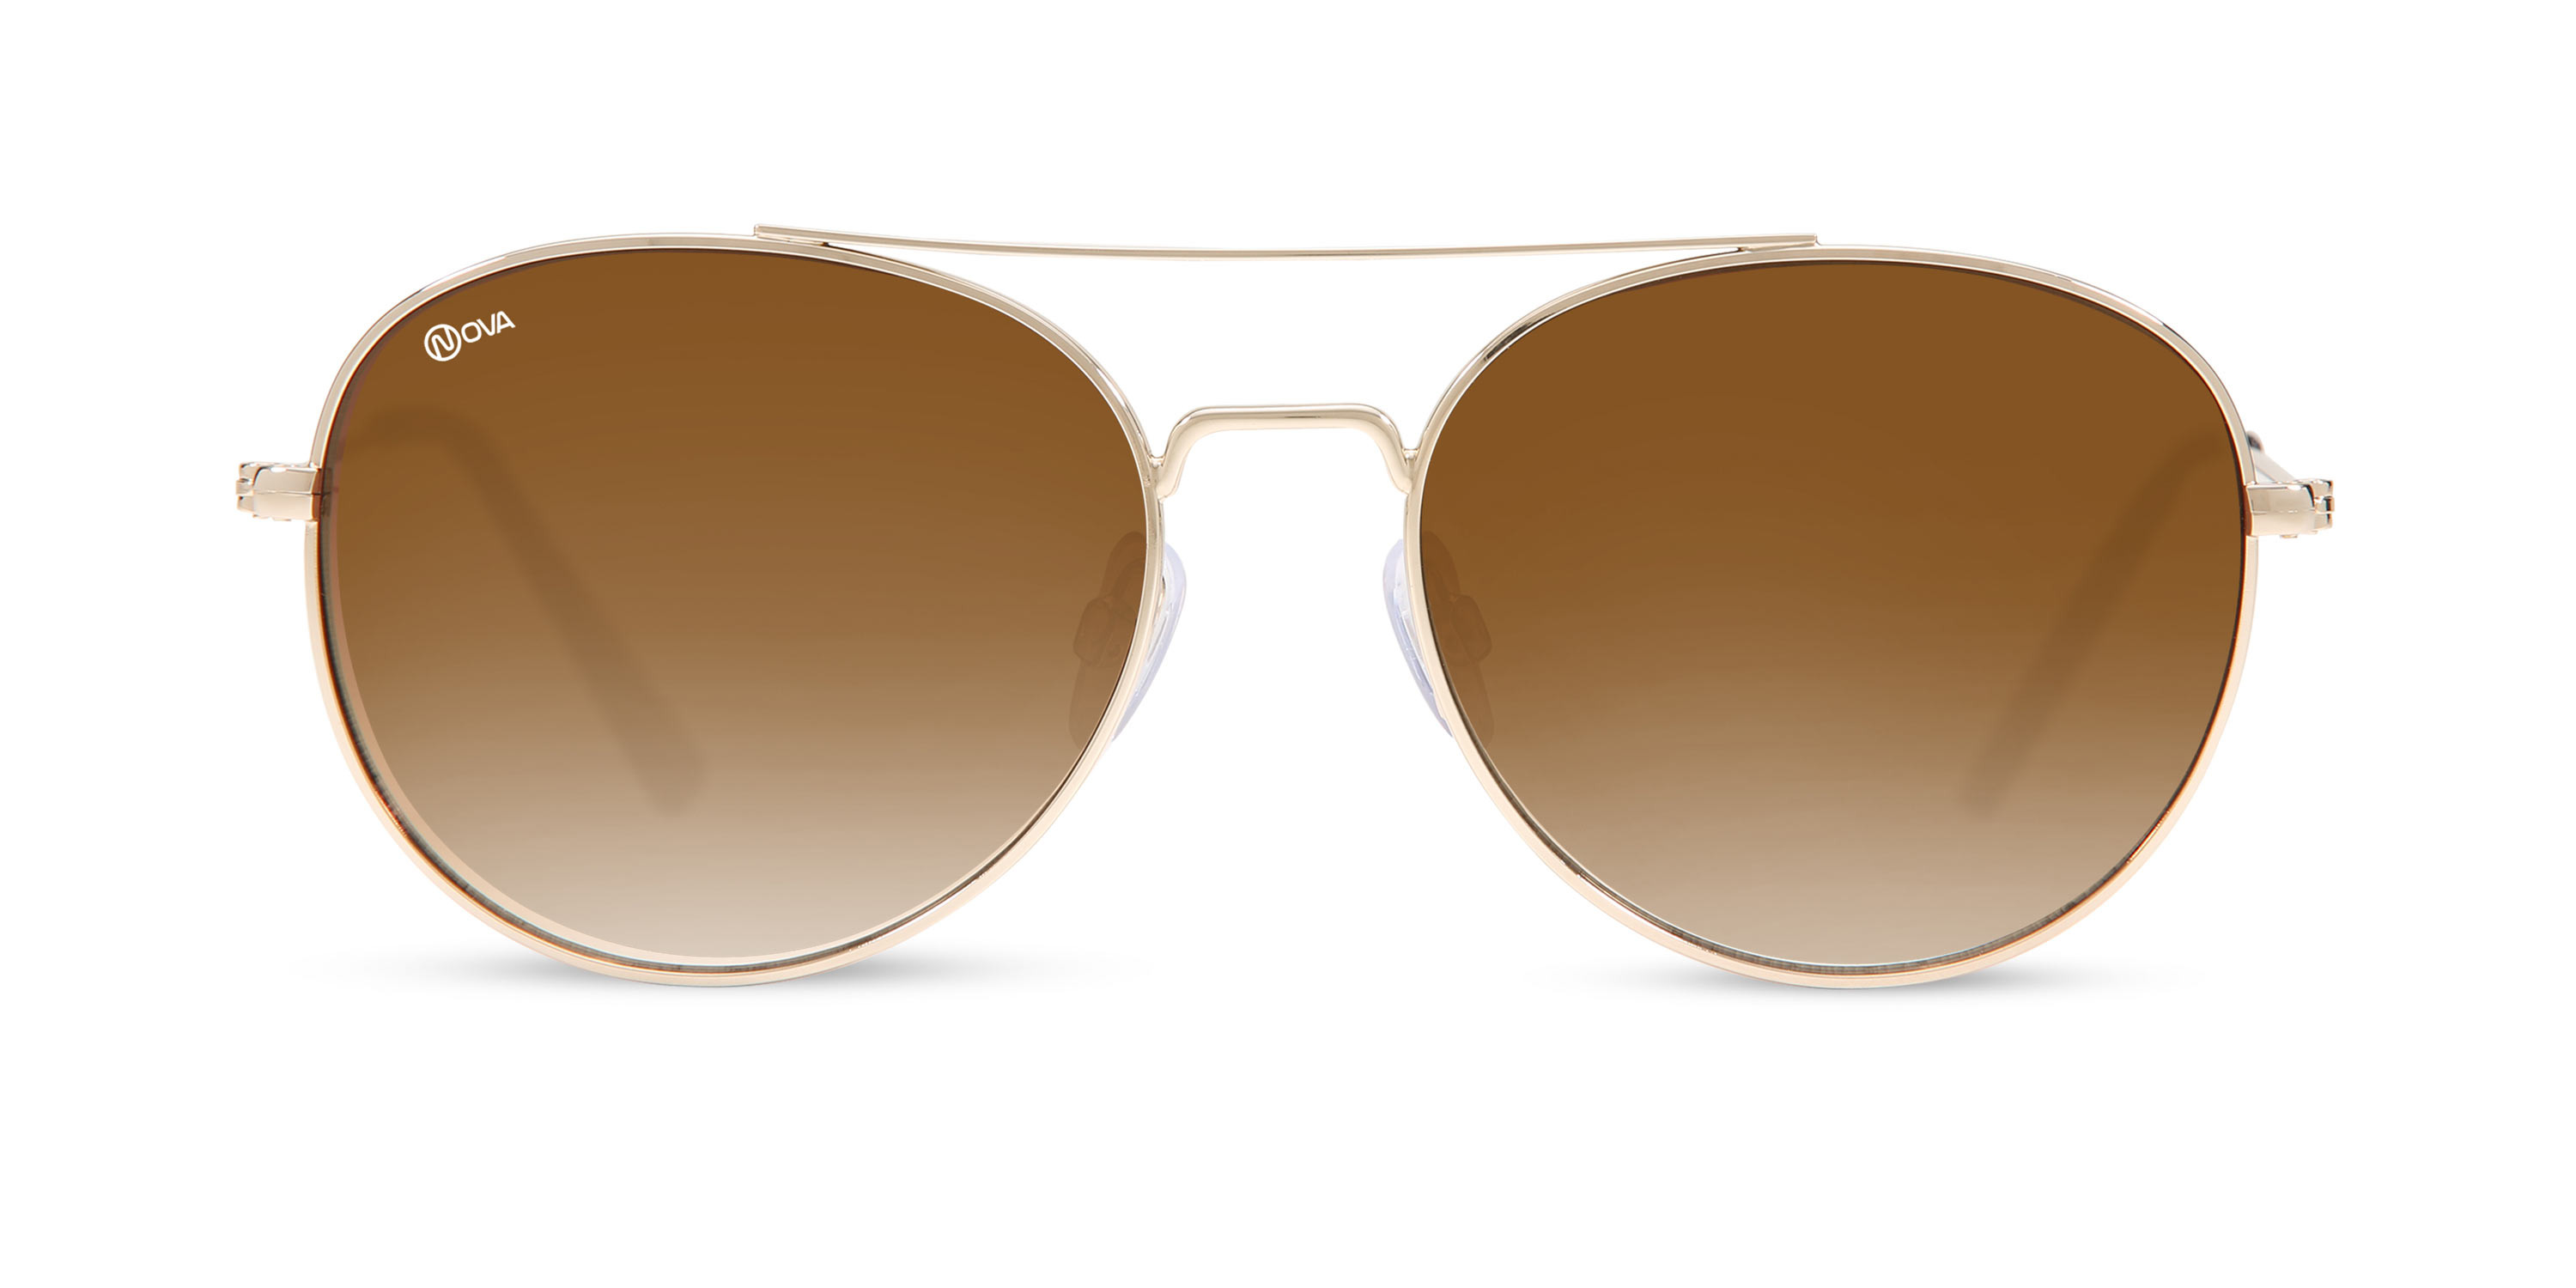 Collection more than 163 nova sunglasses latest